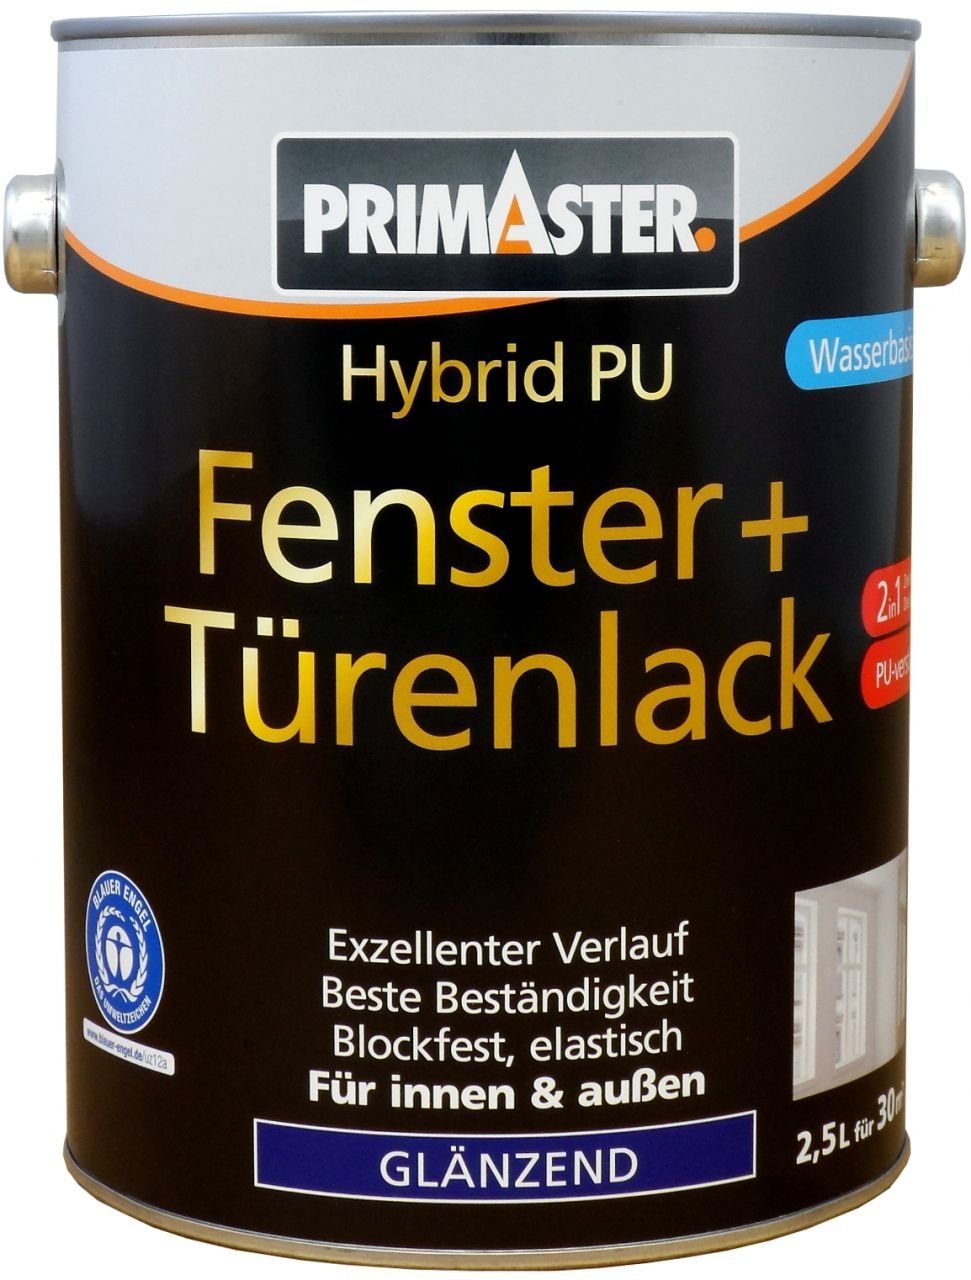 2,5 L Türenlack Primaster Lack u. Fenster- Primaster Hybrid-PU